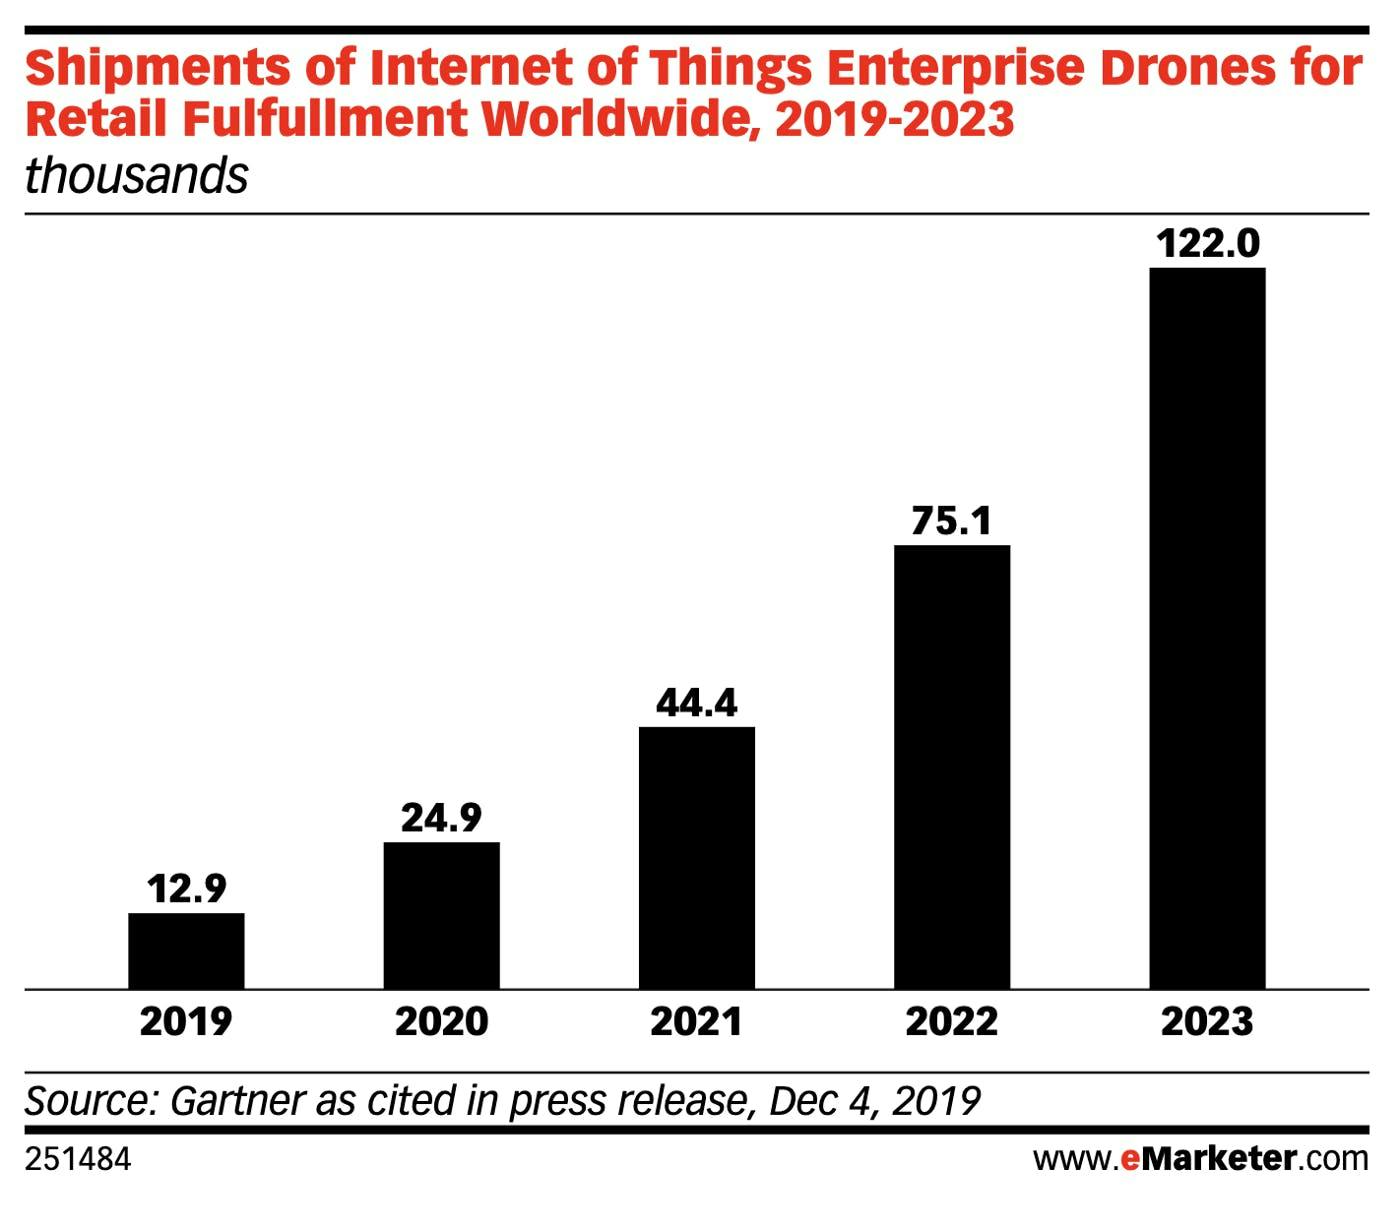 source: https://www.emarketer.com/chart/232558/shipments-of-internet-of-things-enterprise-drones-retail-fulfullment-worldwide-2019-2023-thousands